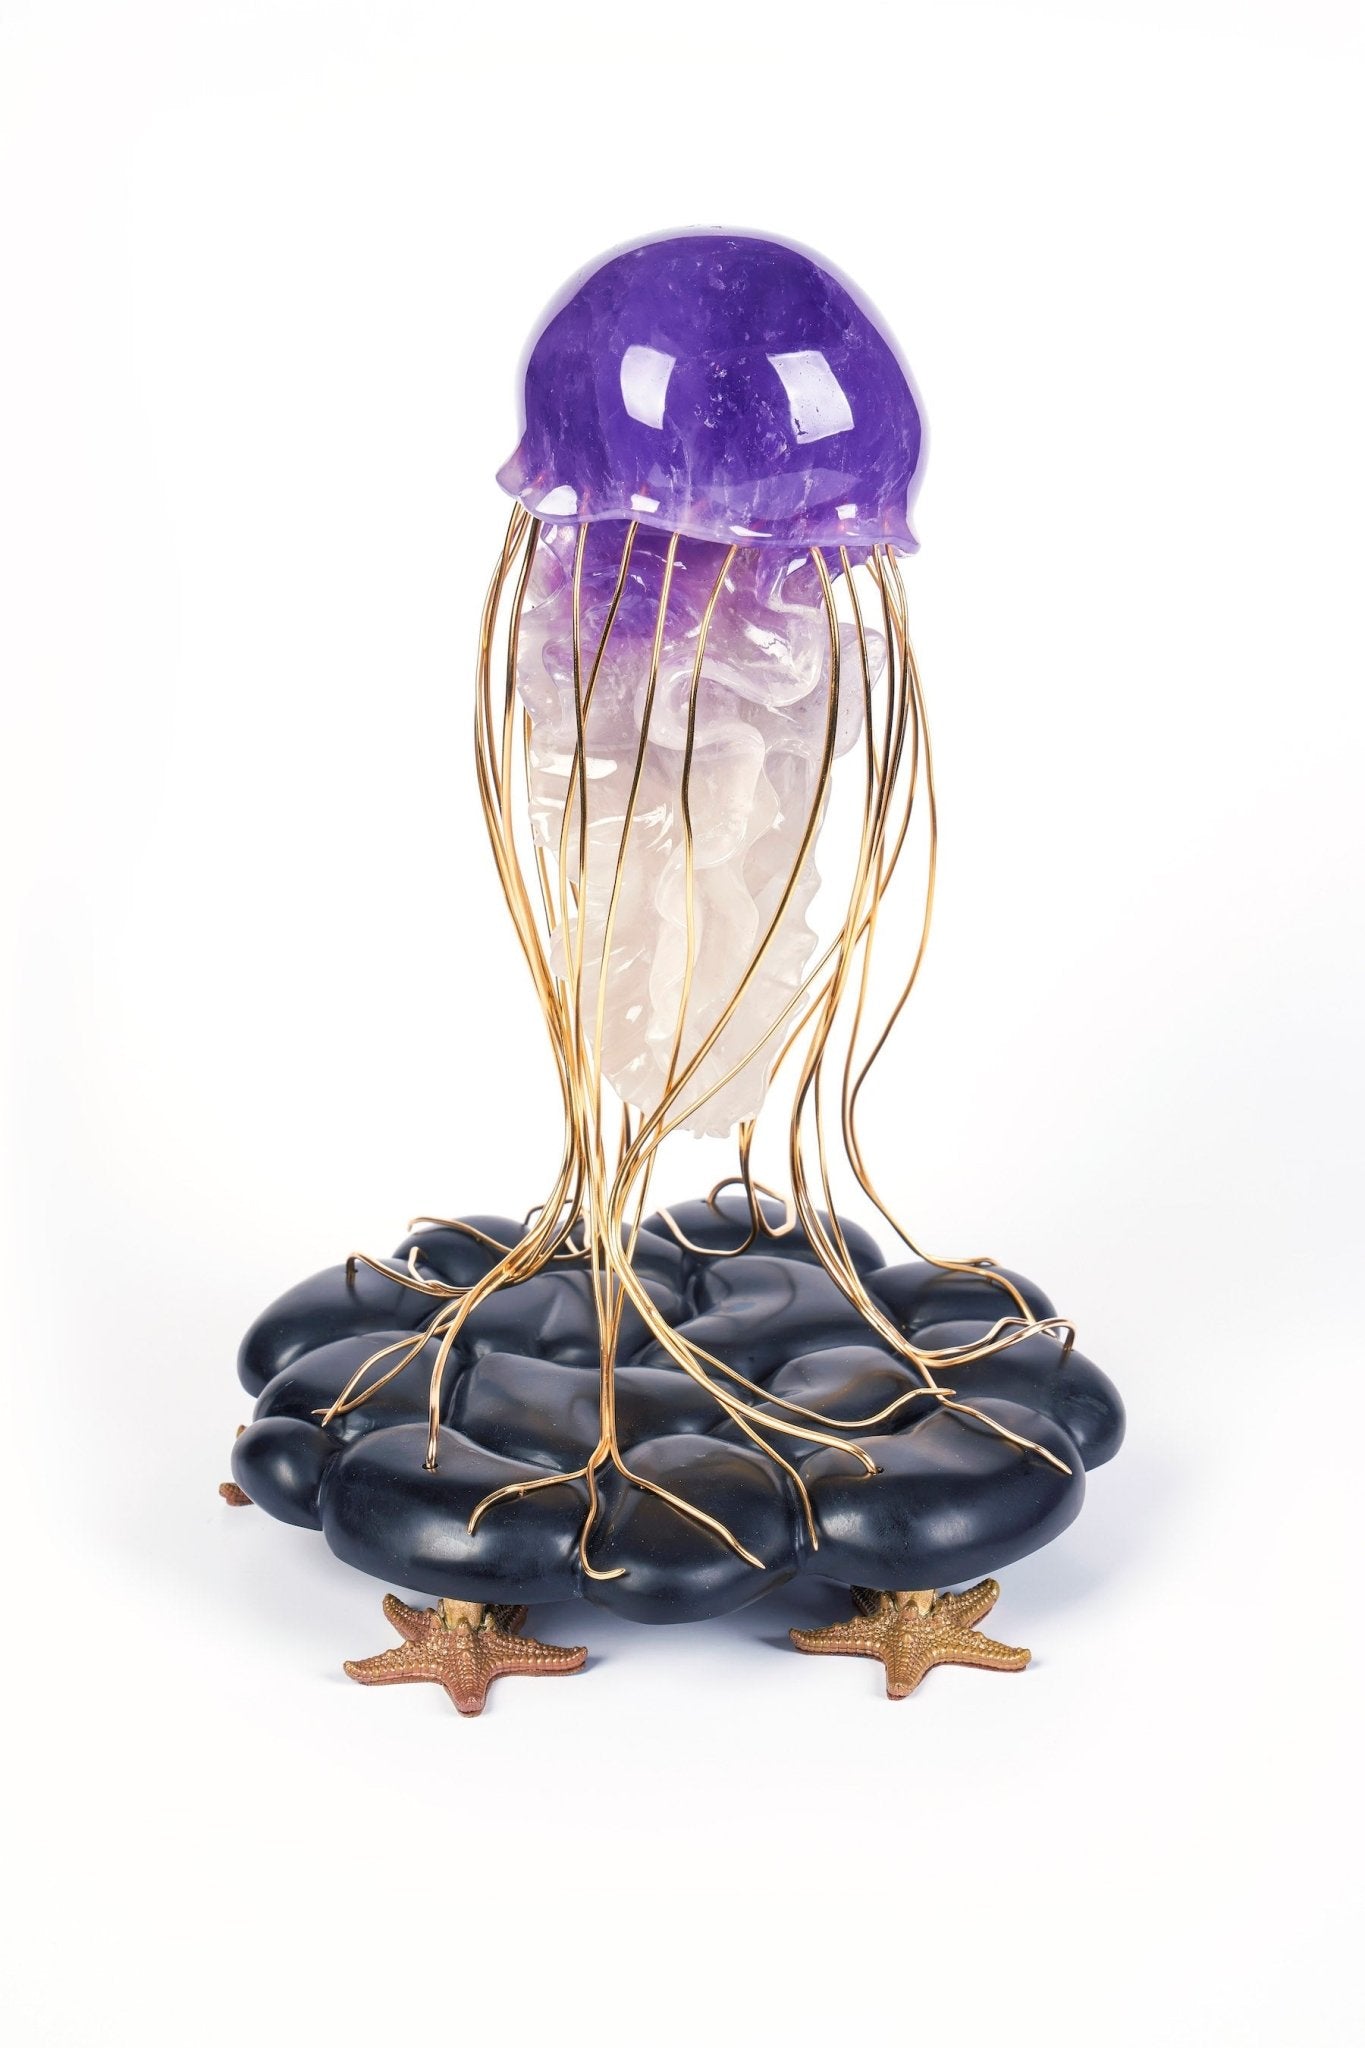 Fine Art Ametrine sculpture "Jellyfish" - Surround Art & Diamonds Sculpture by L'Aquart